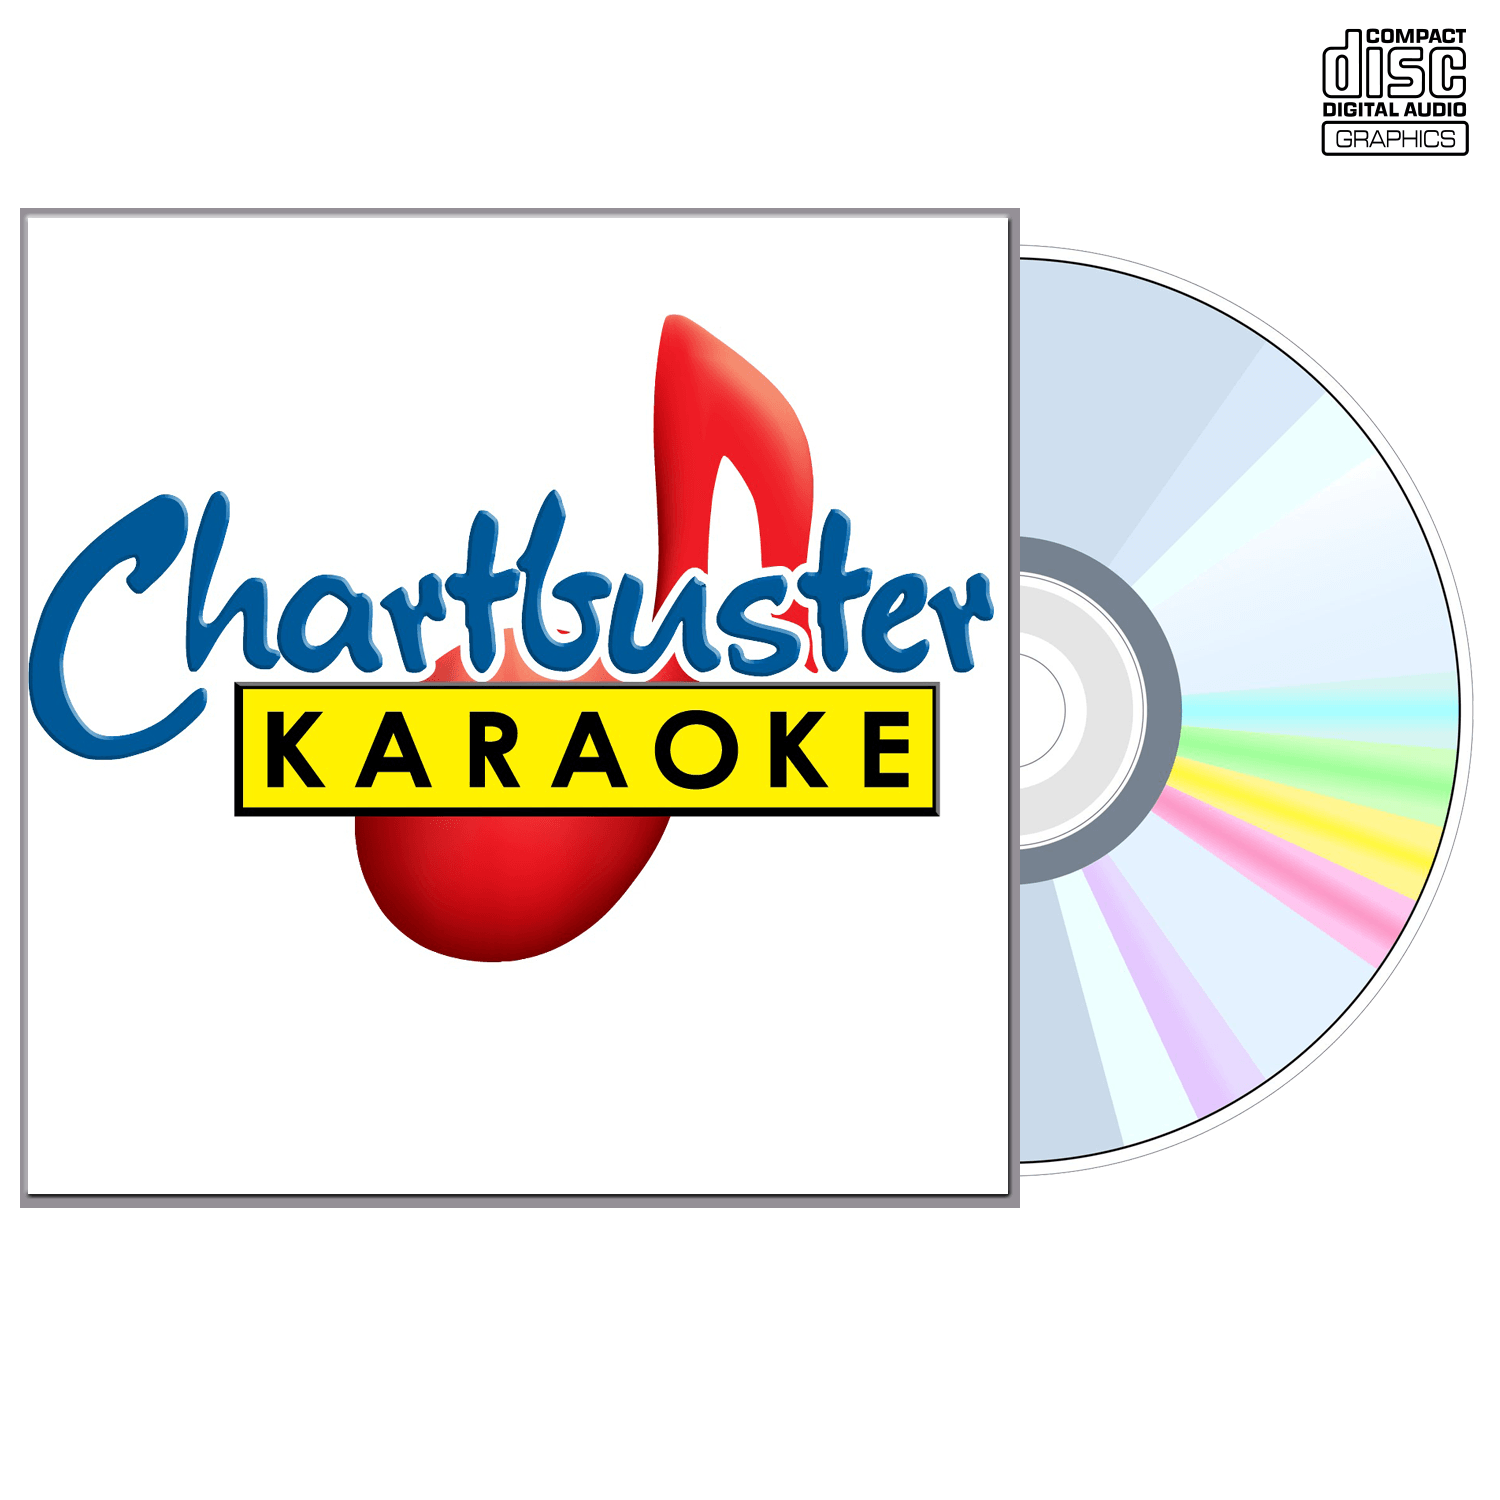 Keith Harling - CD+G - Chartbuster Karaoke - Karaoke Home Entertainment